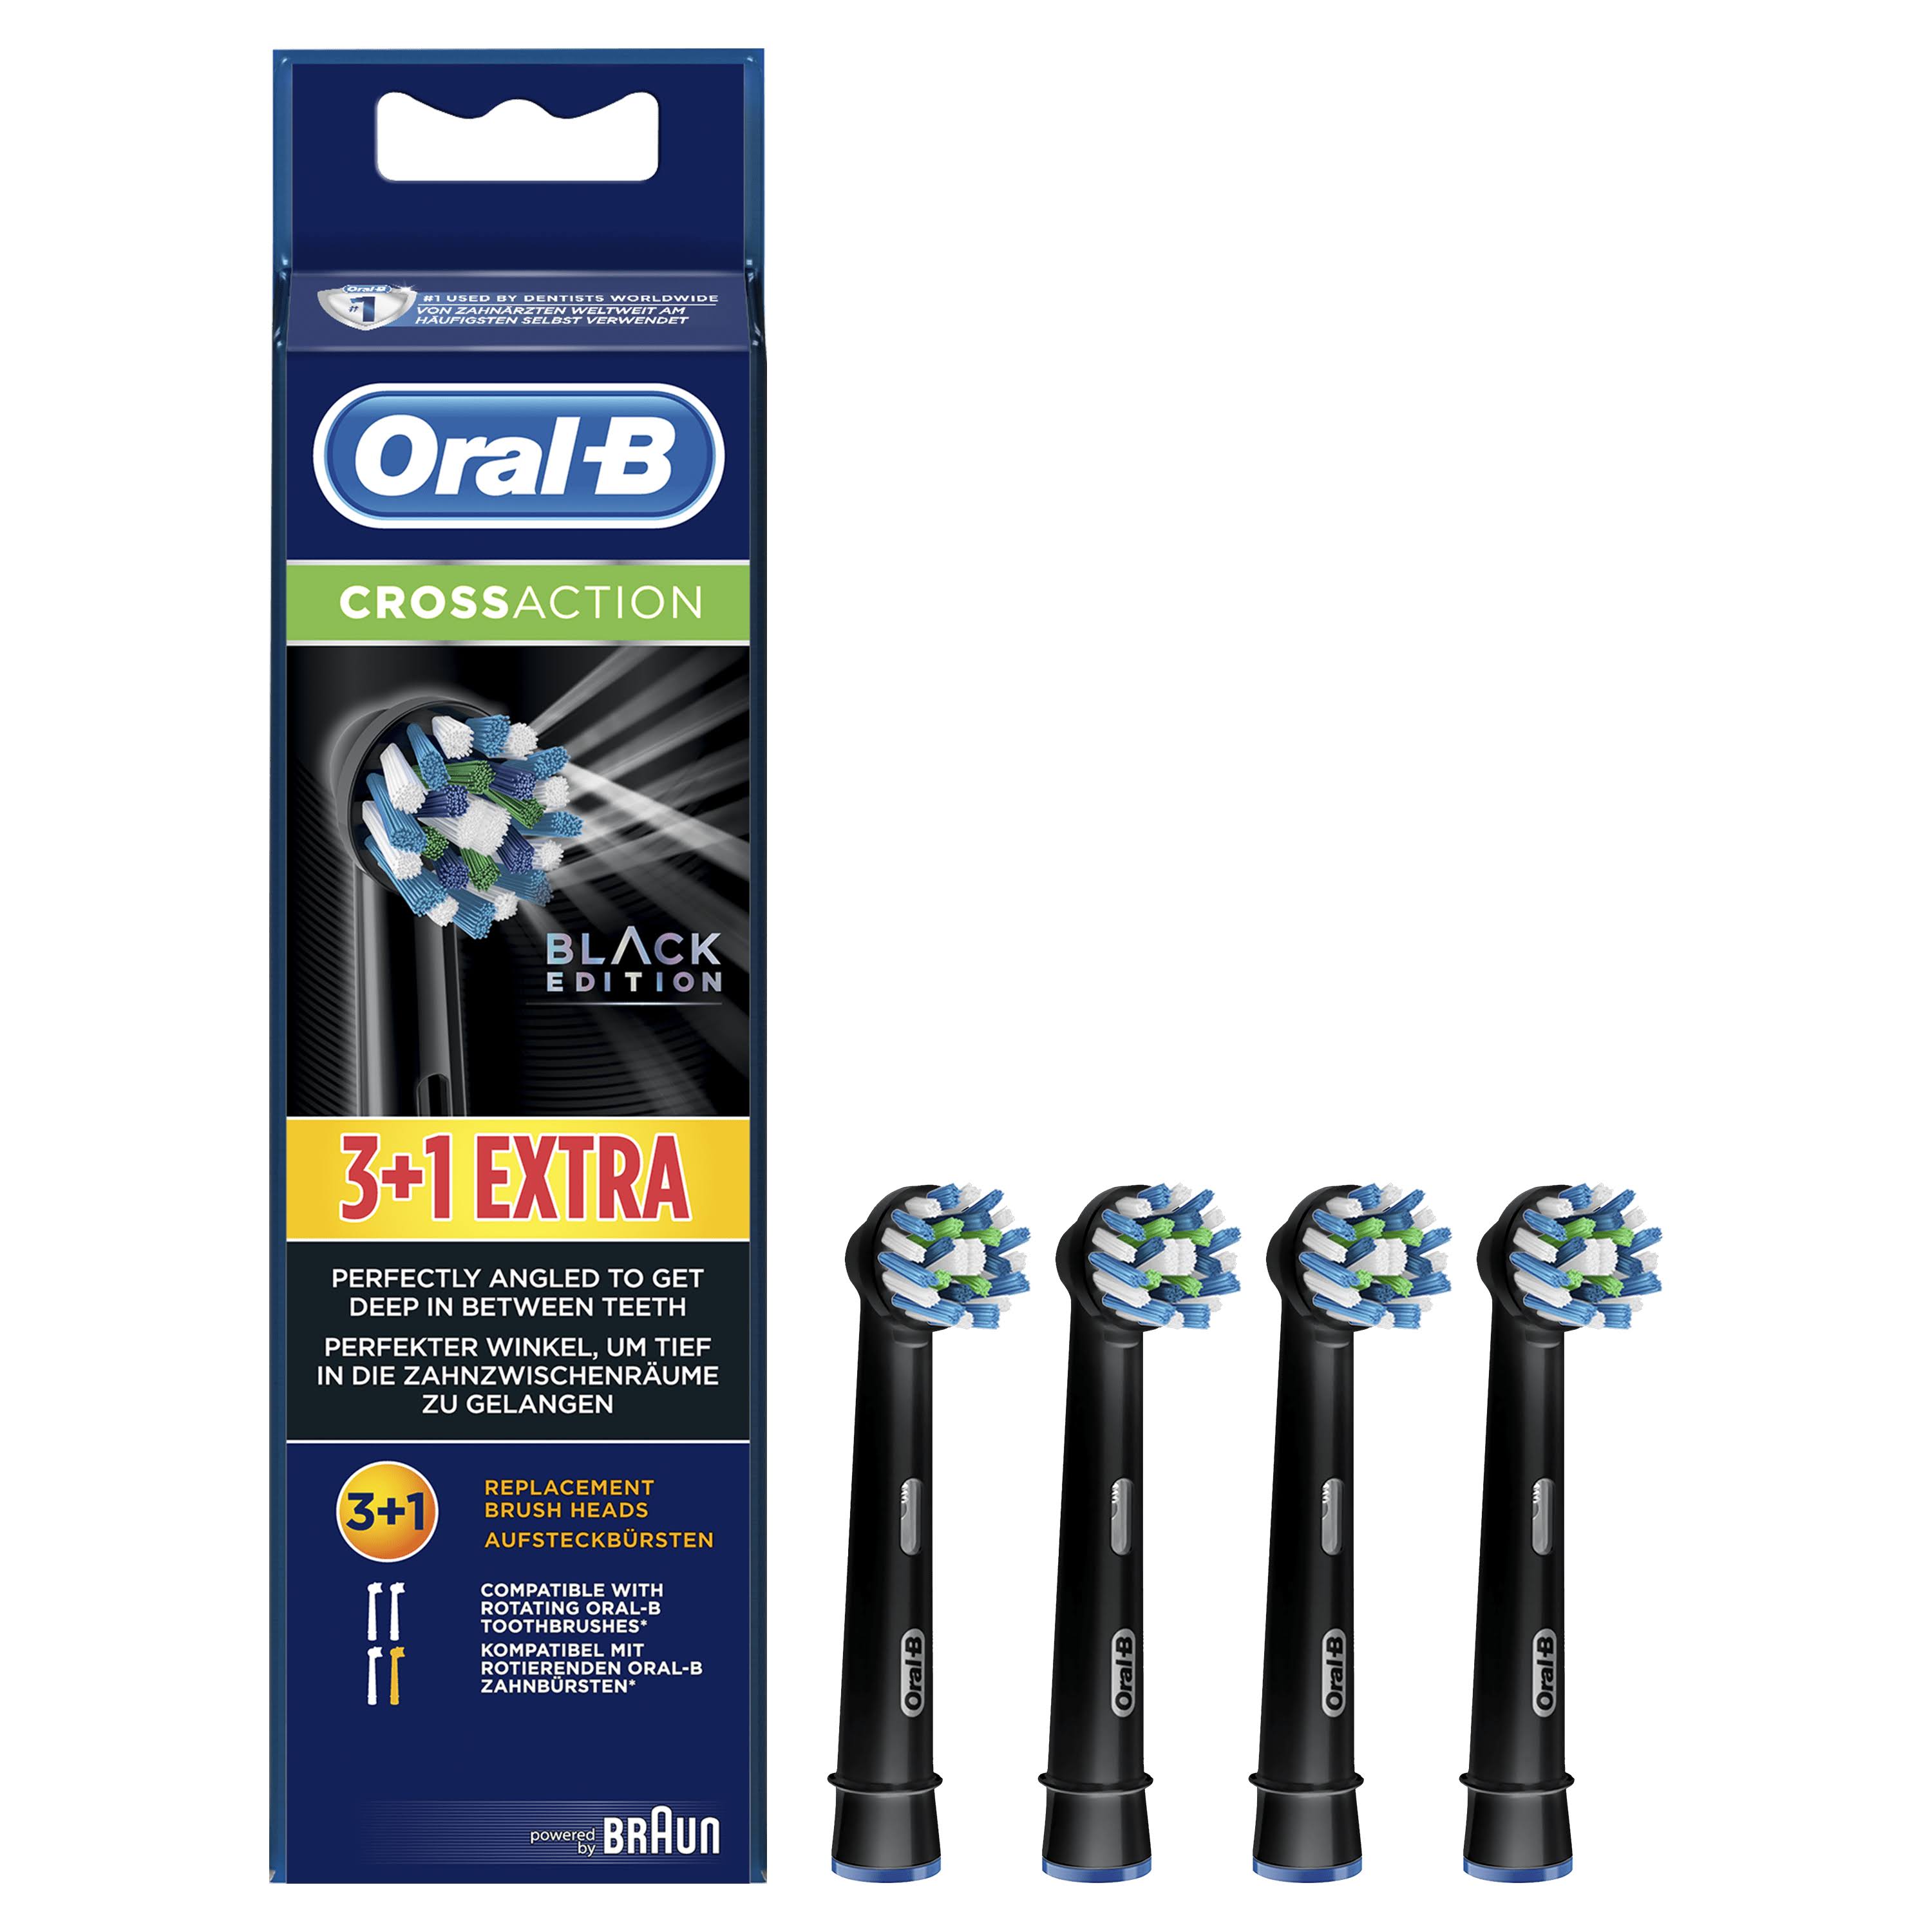 Oral-B CrossAction Brushes, Black, Pack of 4, Black Edition